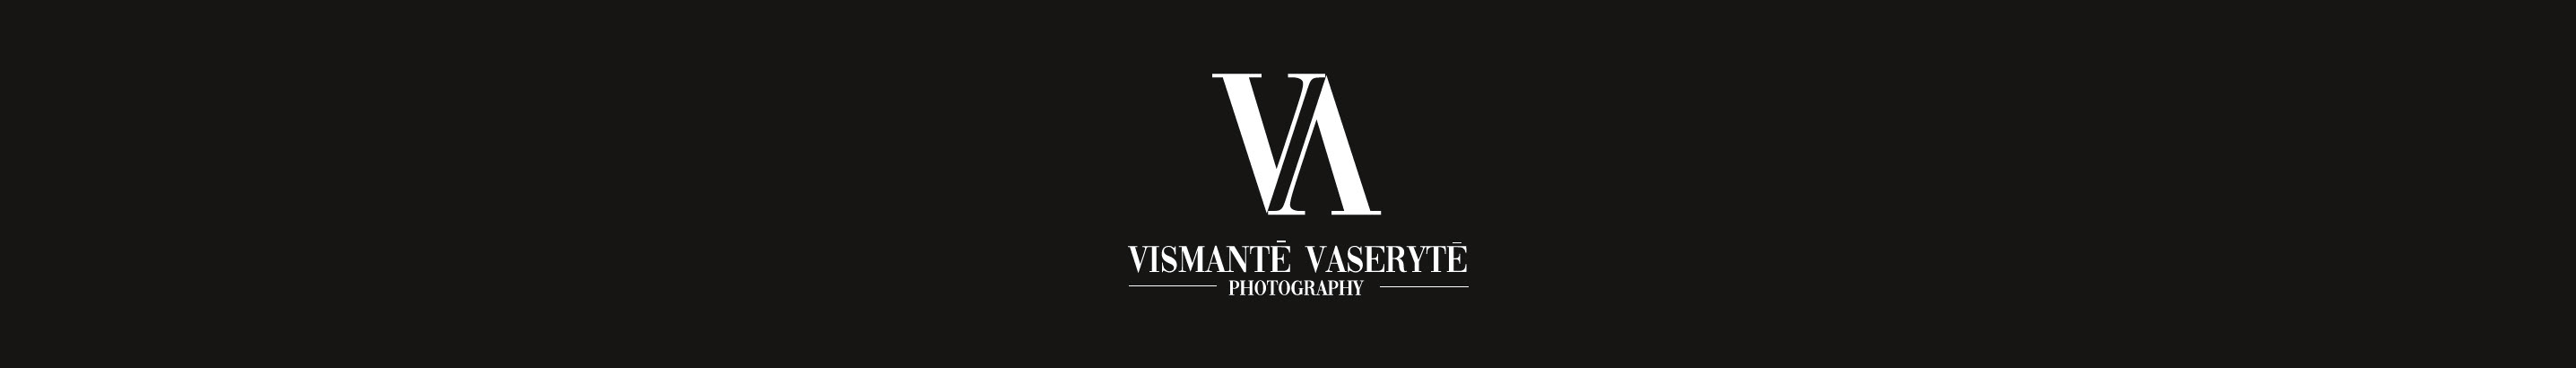 Vismante Vaserytes profilbanner